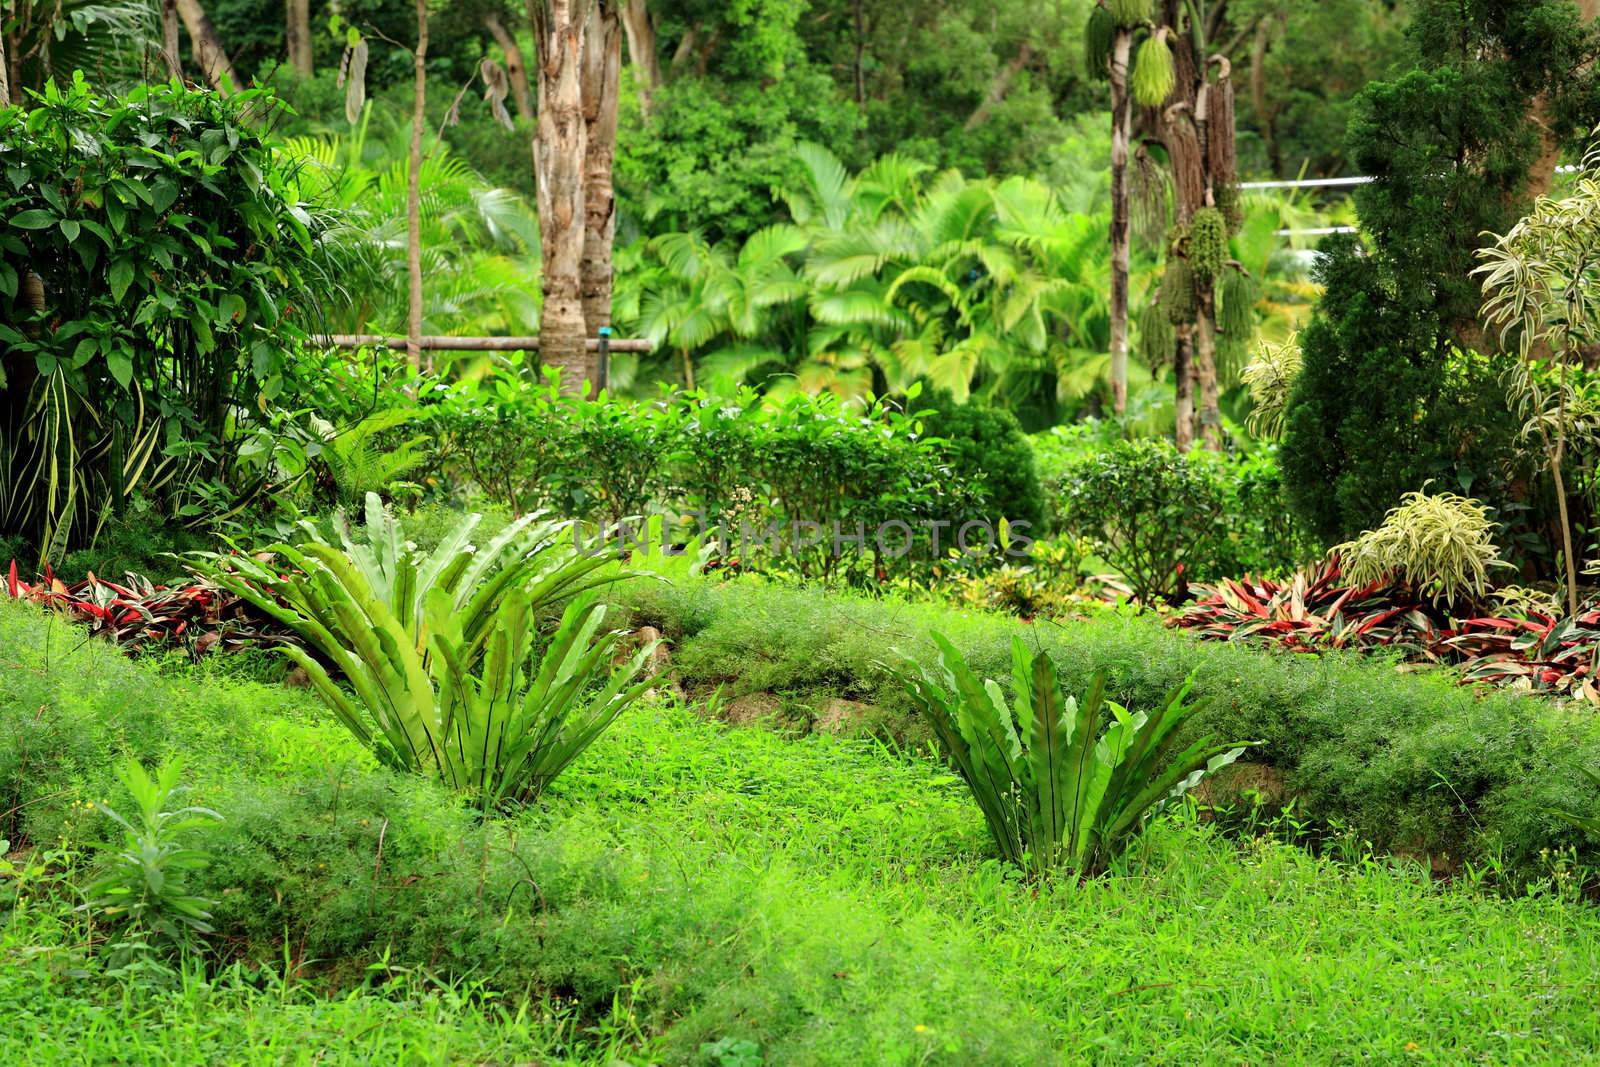 green plants background